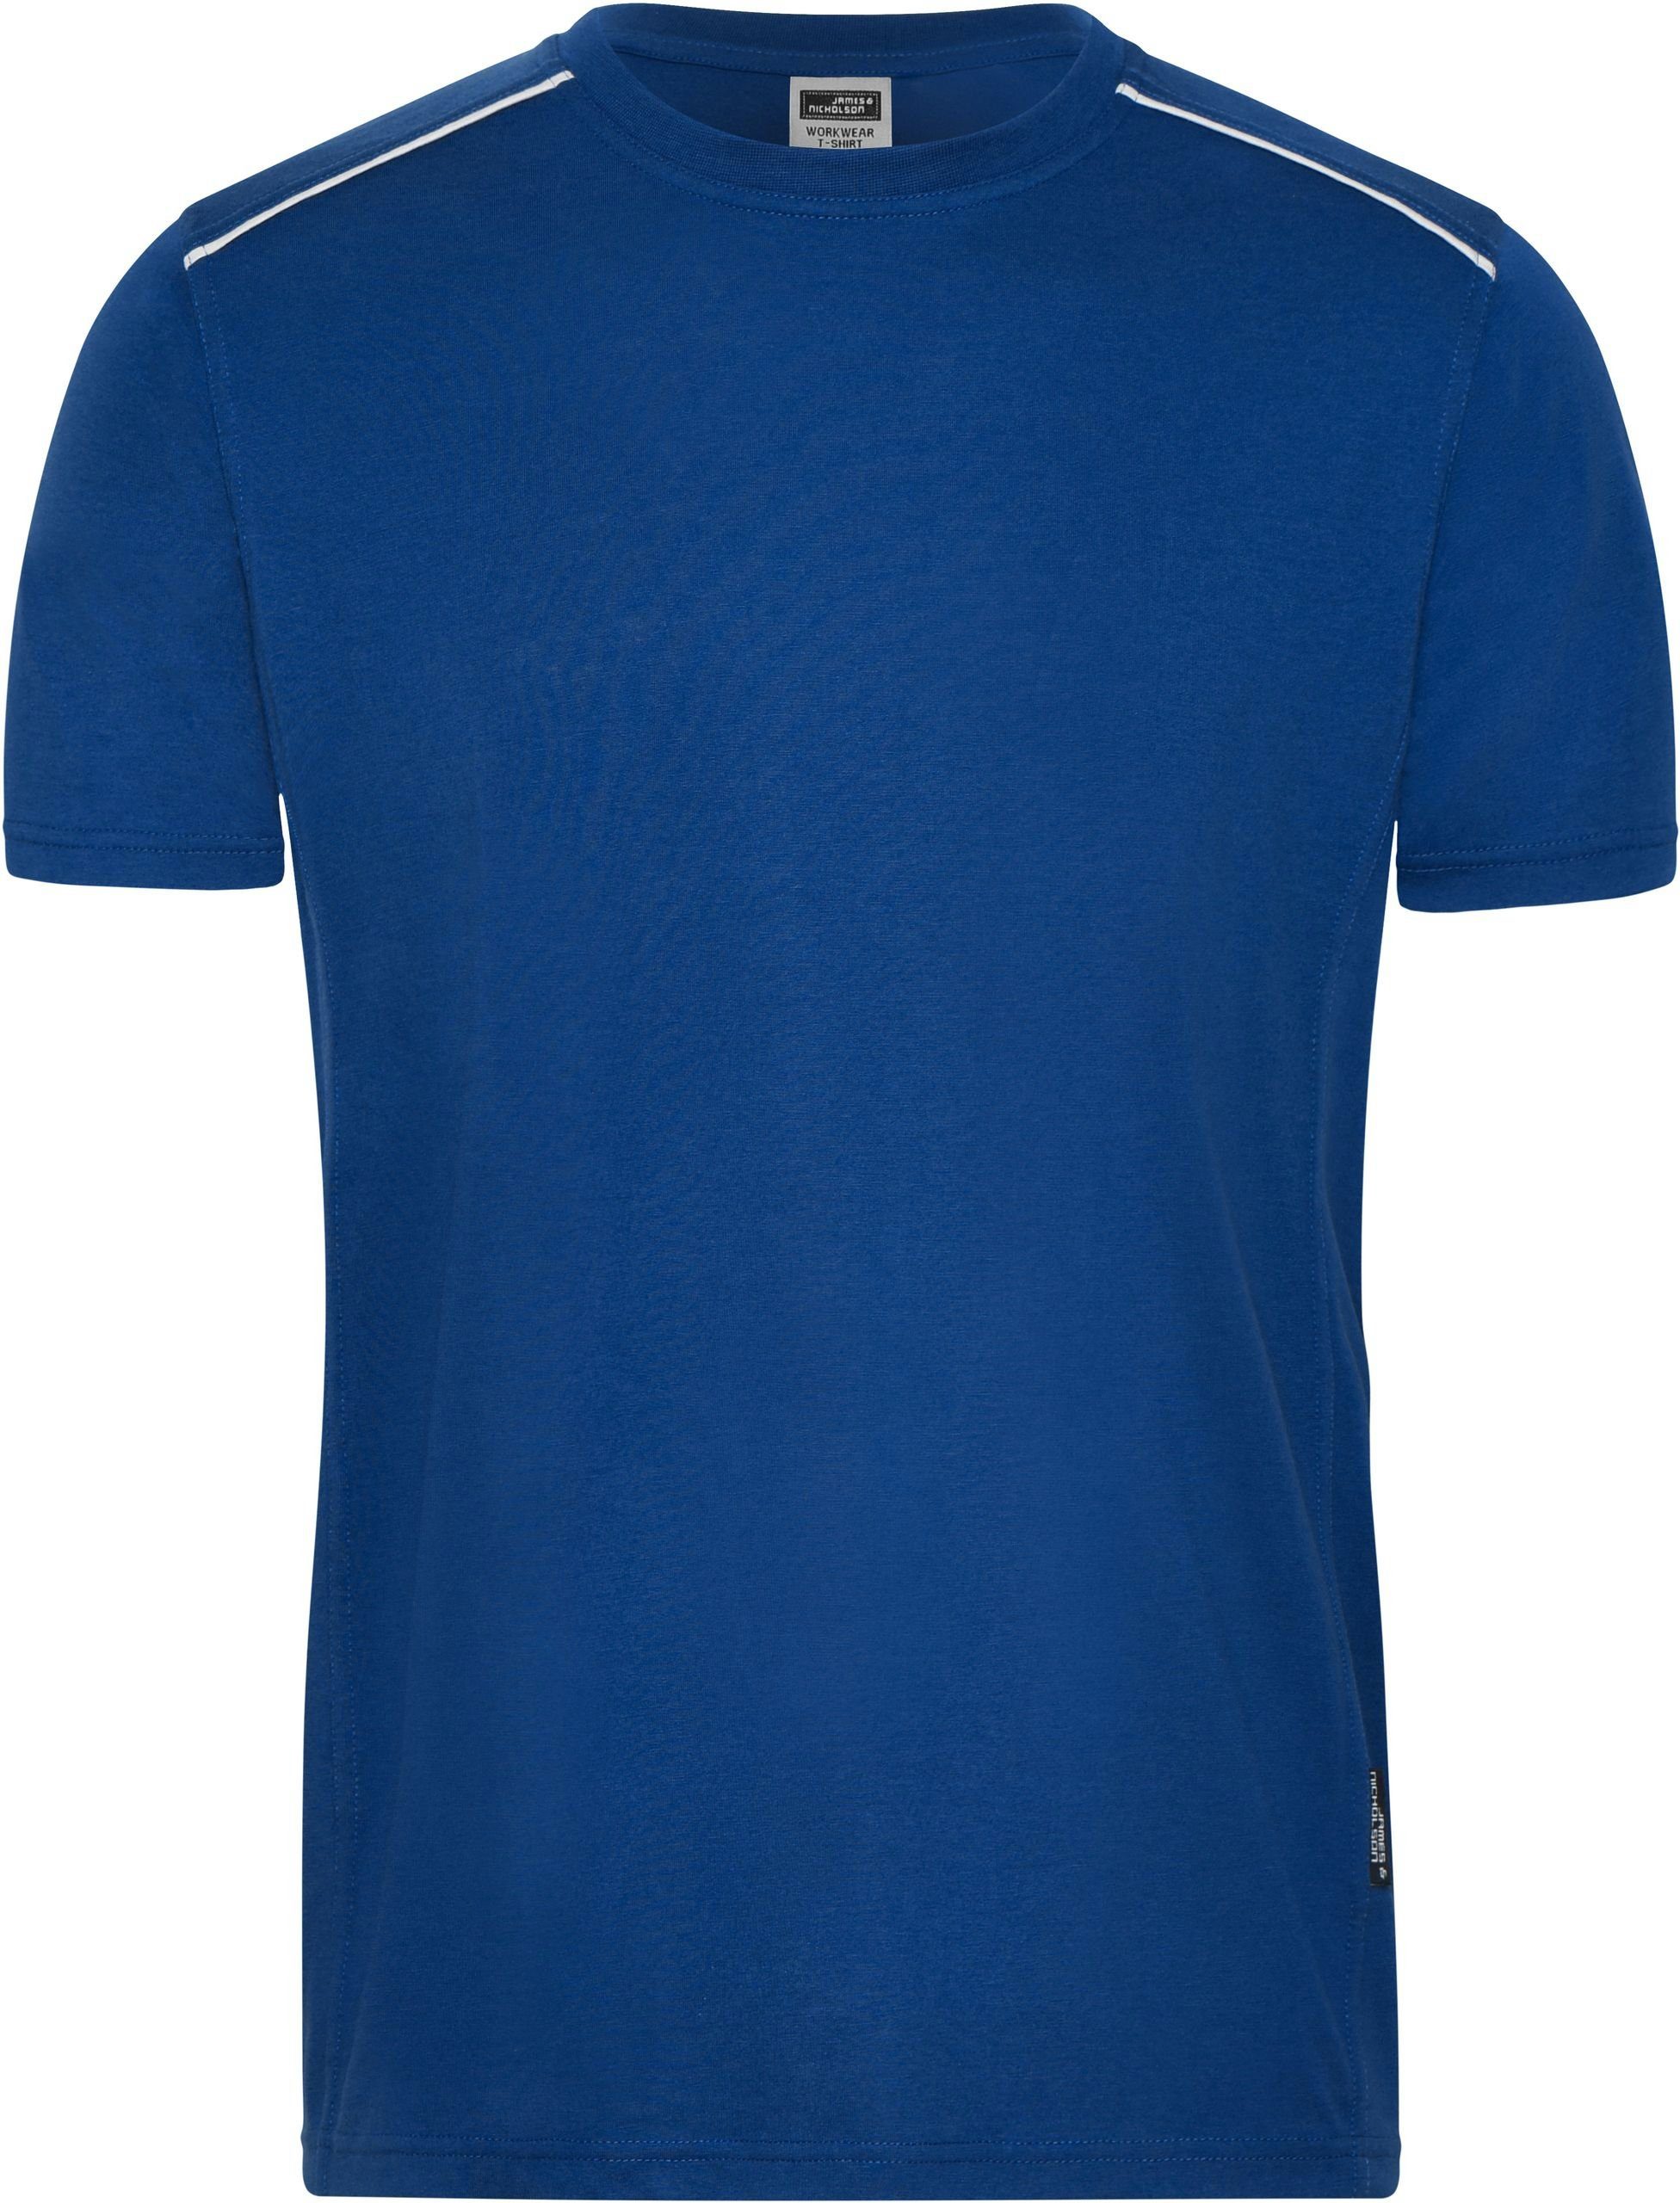 Workwear Nicholson James & T-Shirt T-Shirt Baumwolle FaS50890 Arbeits Bio Olive -Solid-